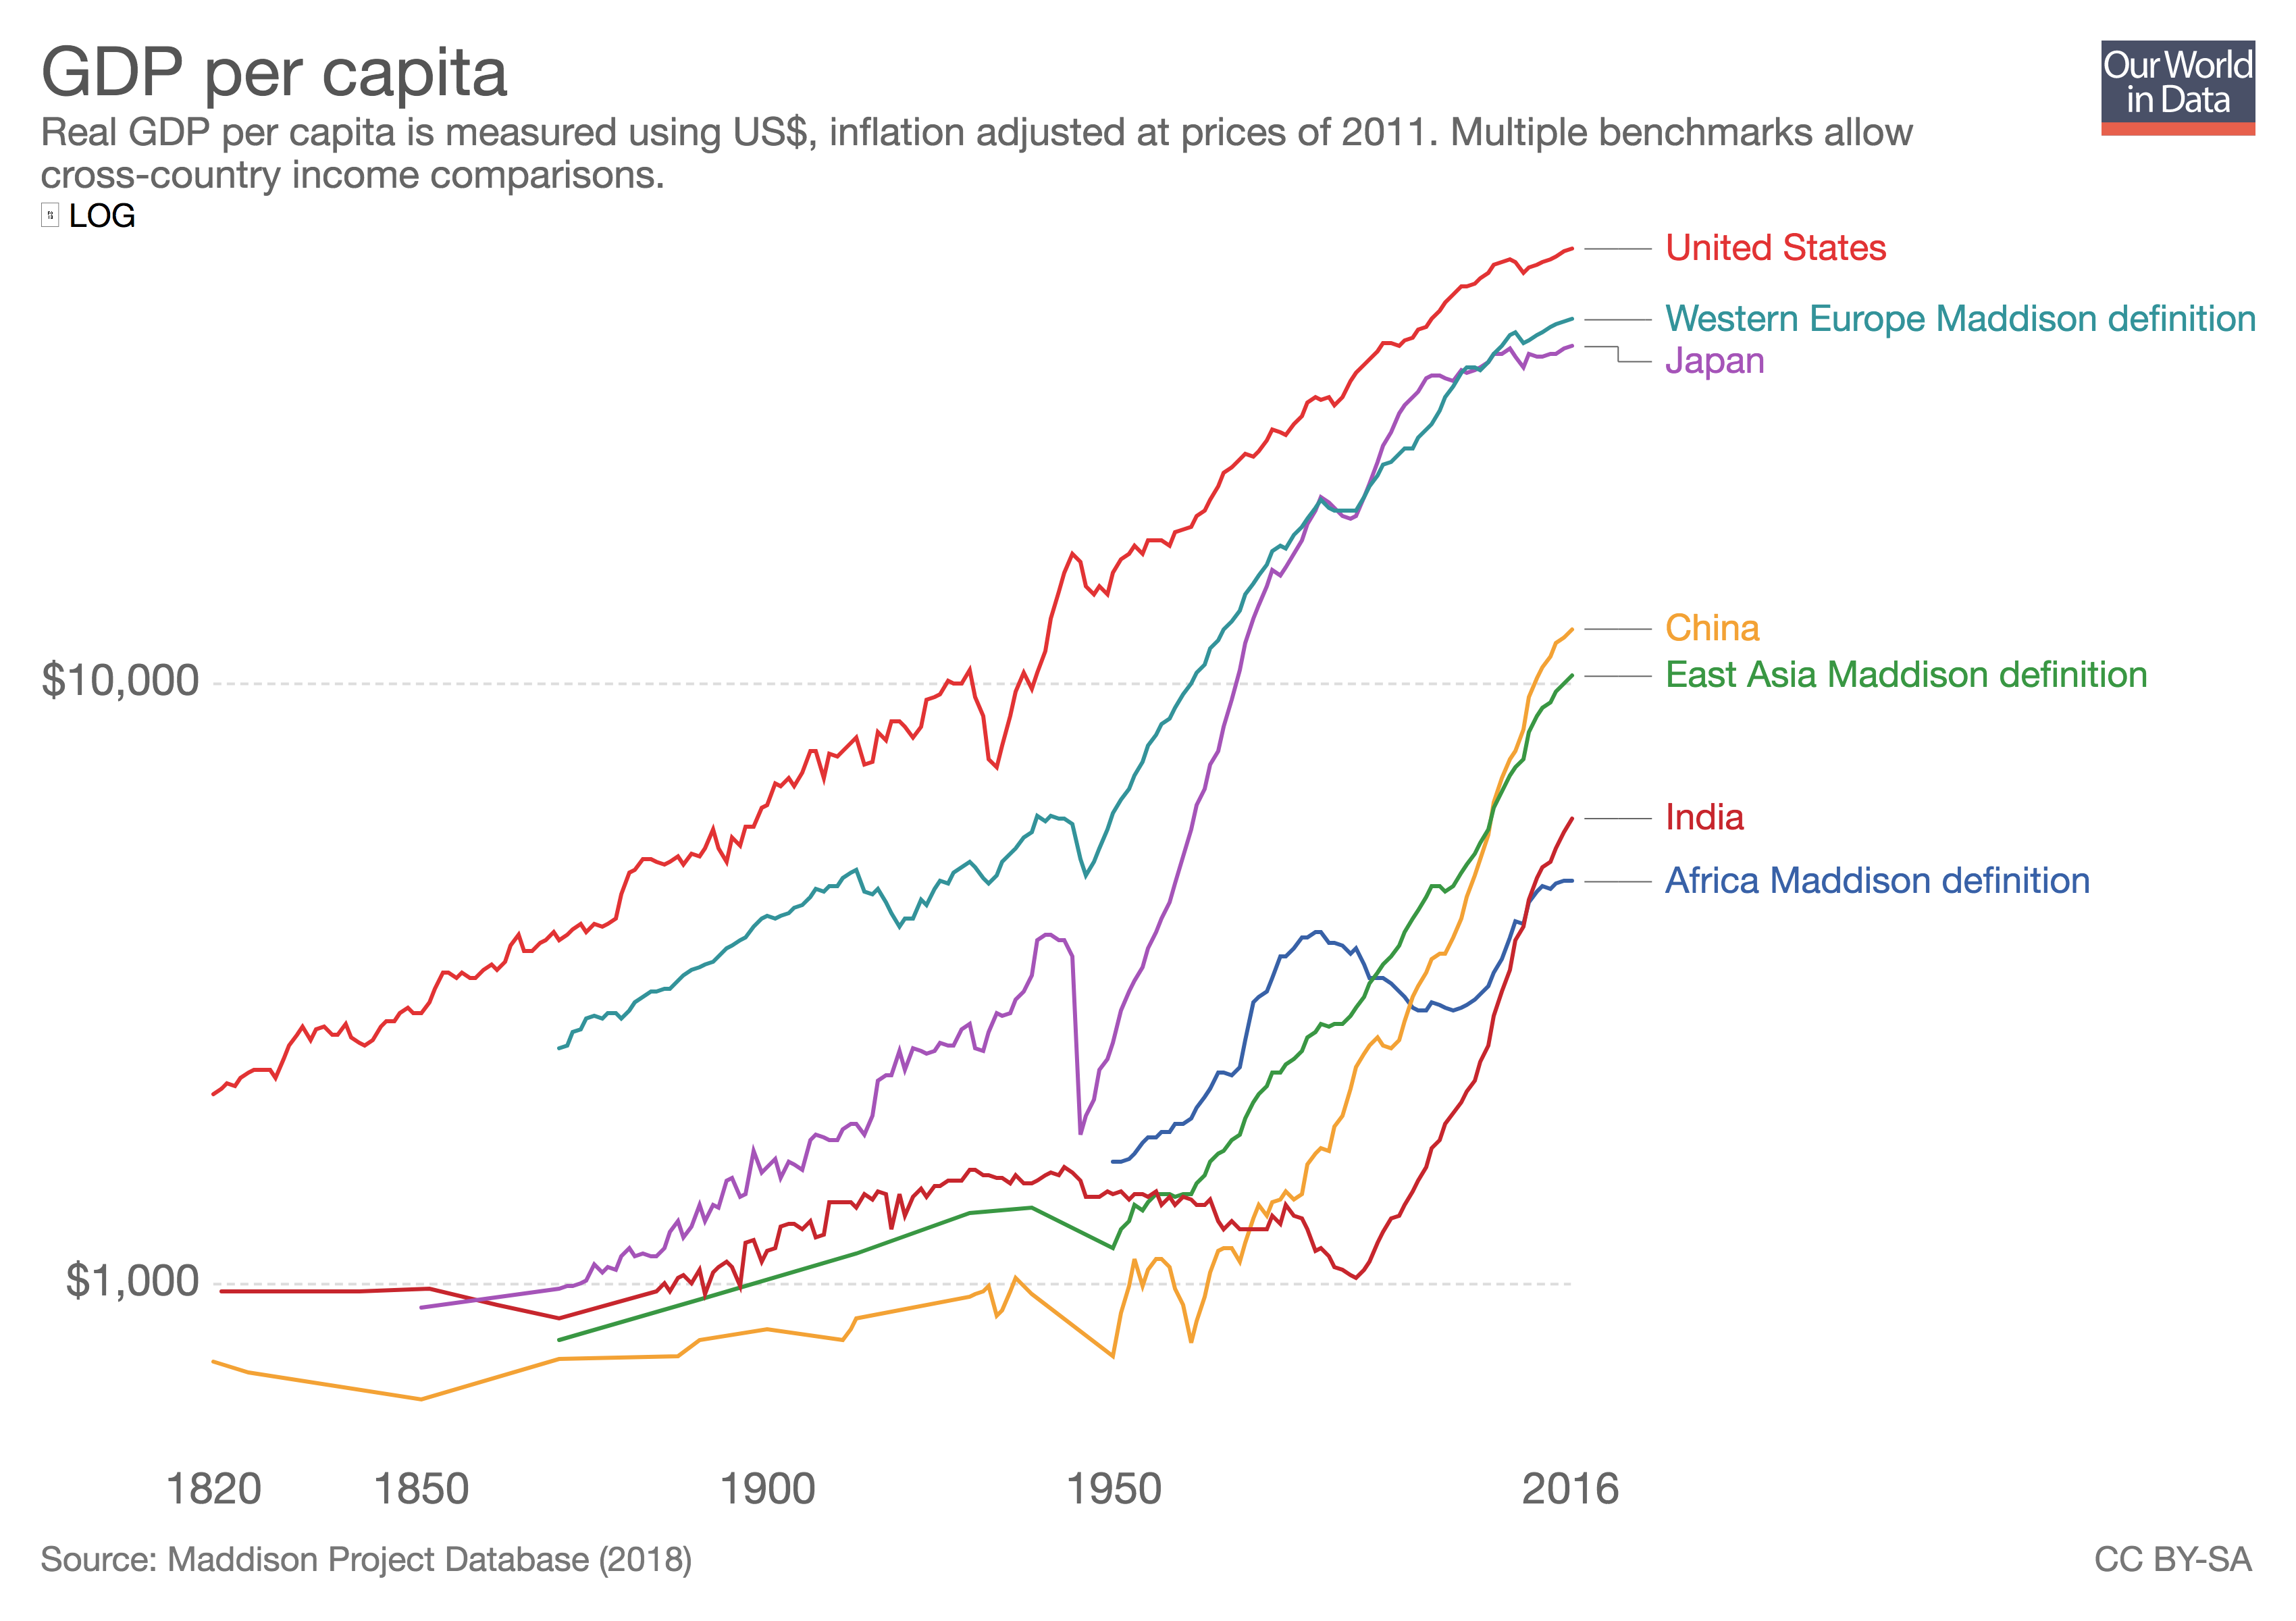 image: GDP per capita